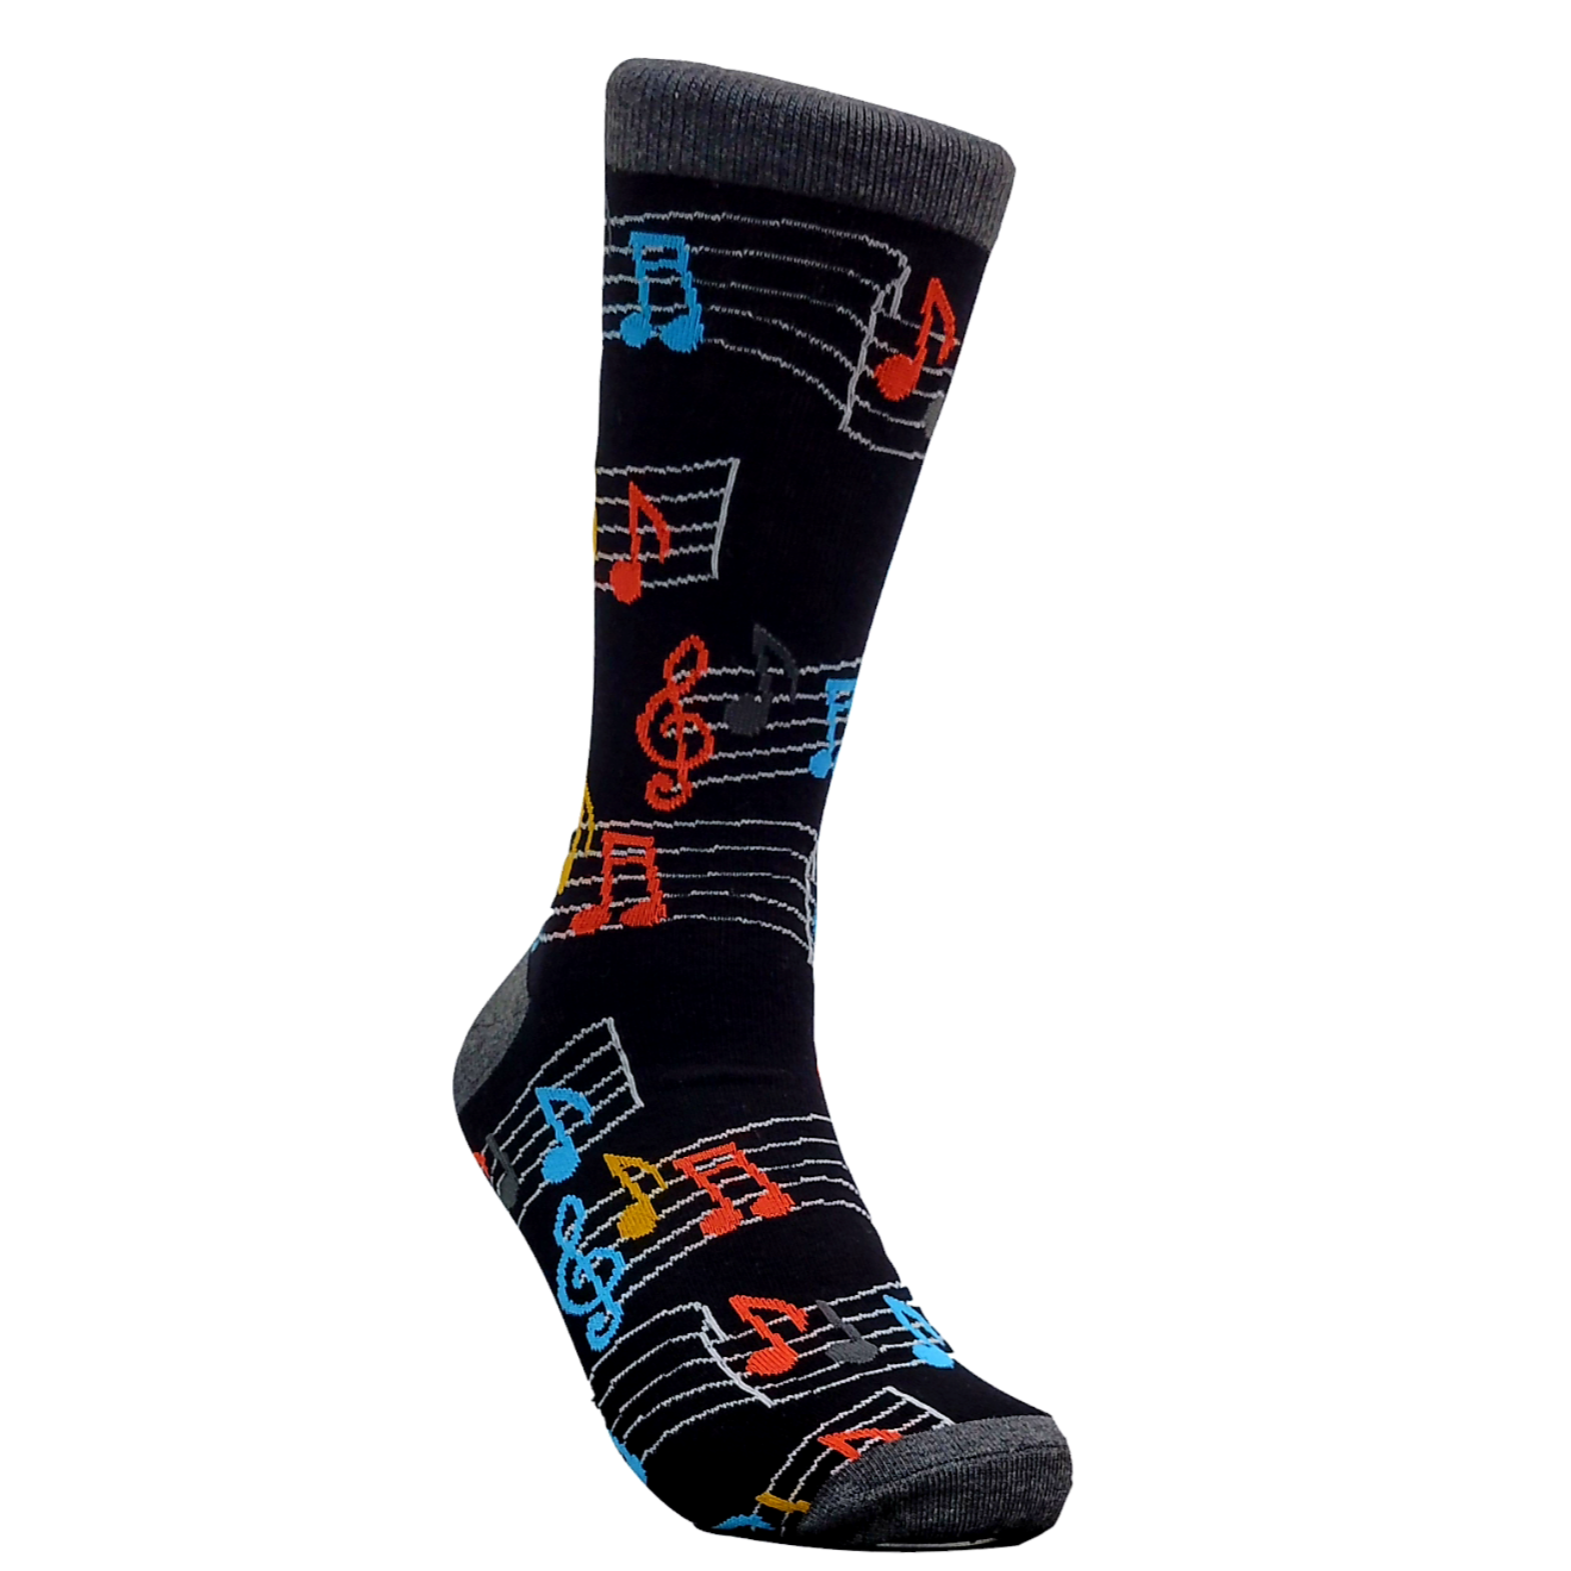 Music Note Pattern Socks from the Sock Panda